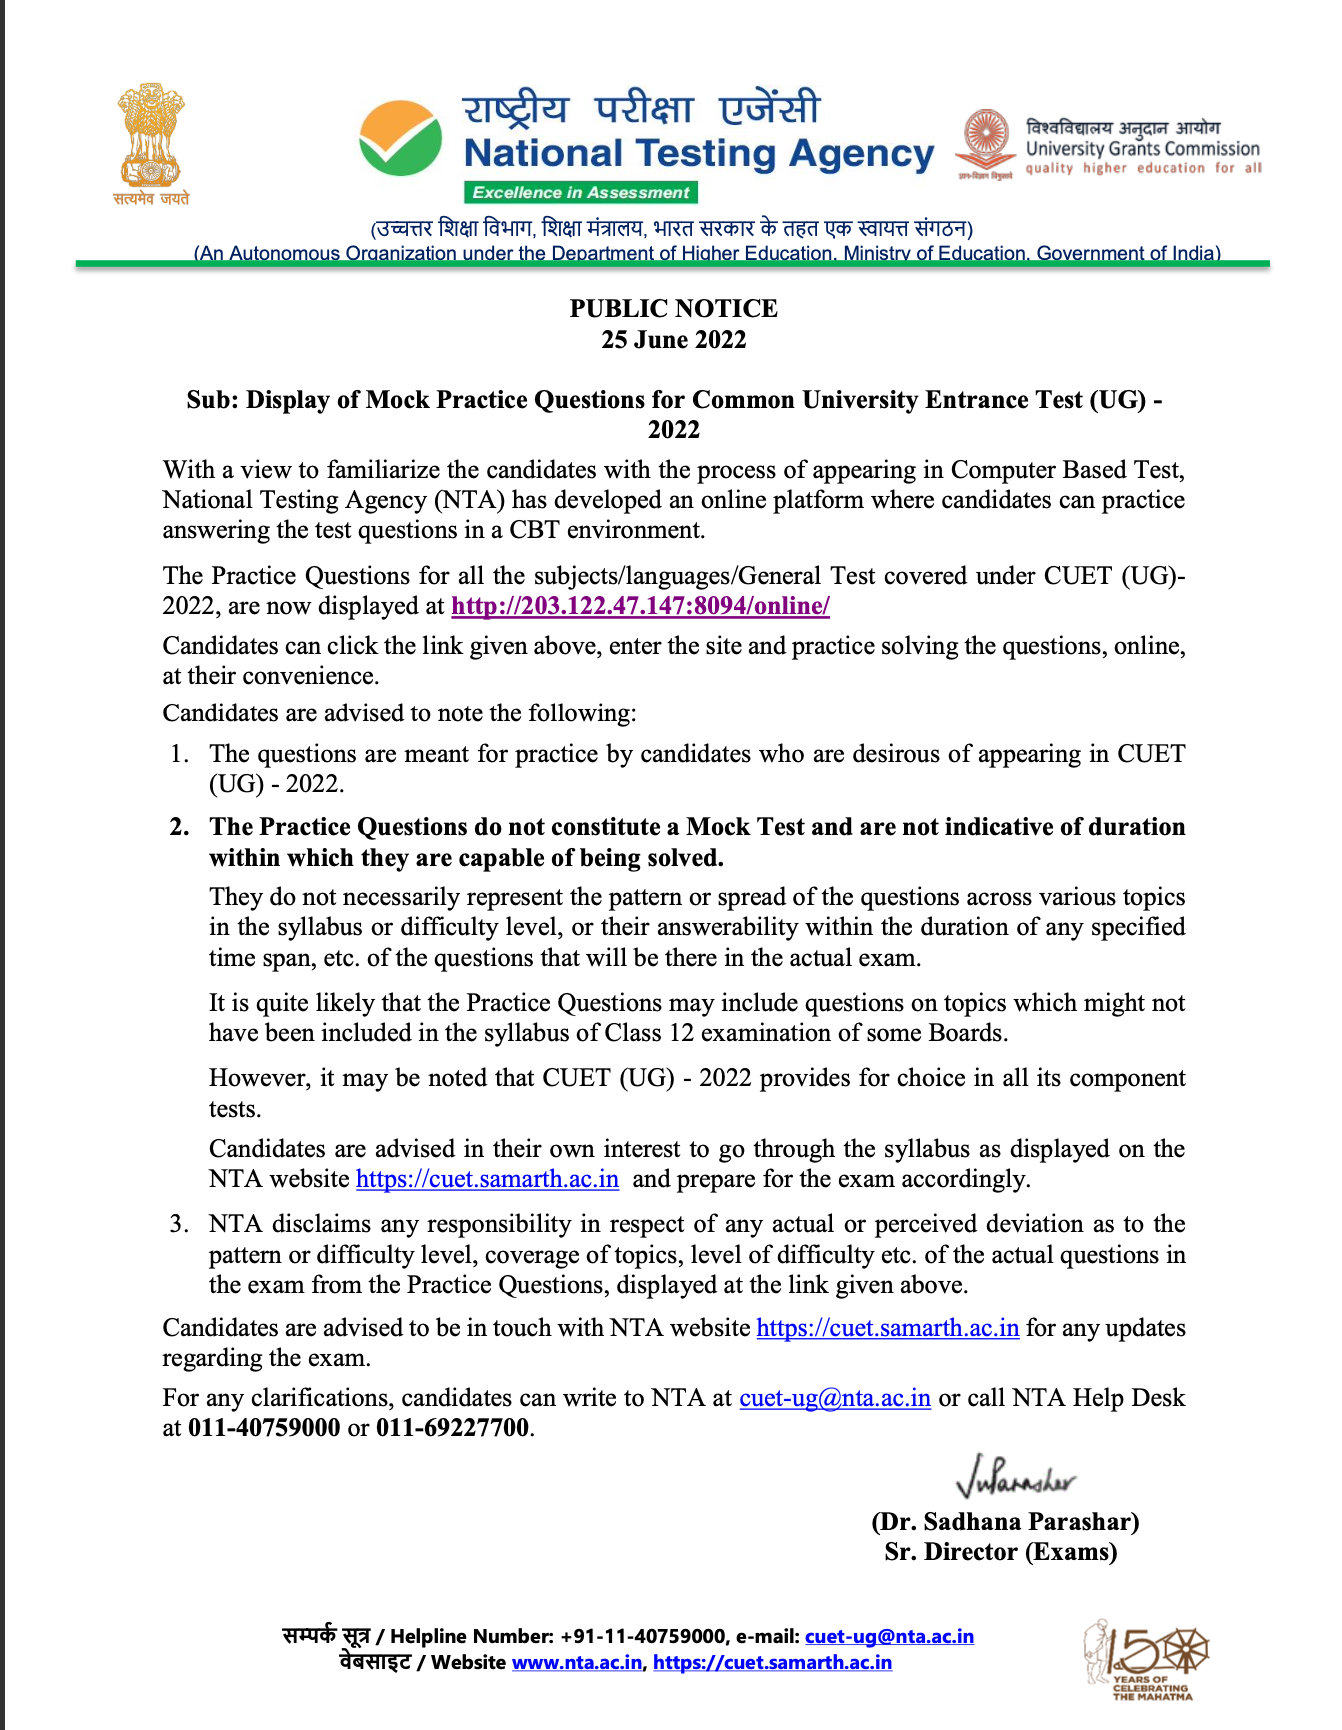 CUET Official Mock Test Release Notice